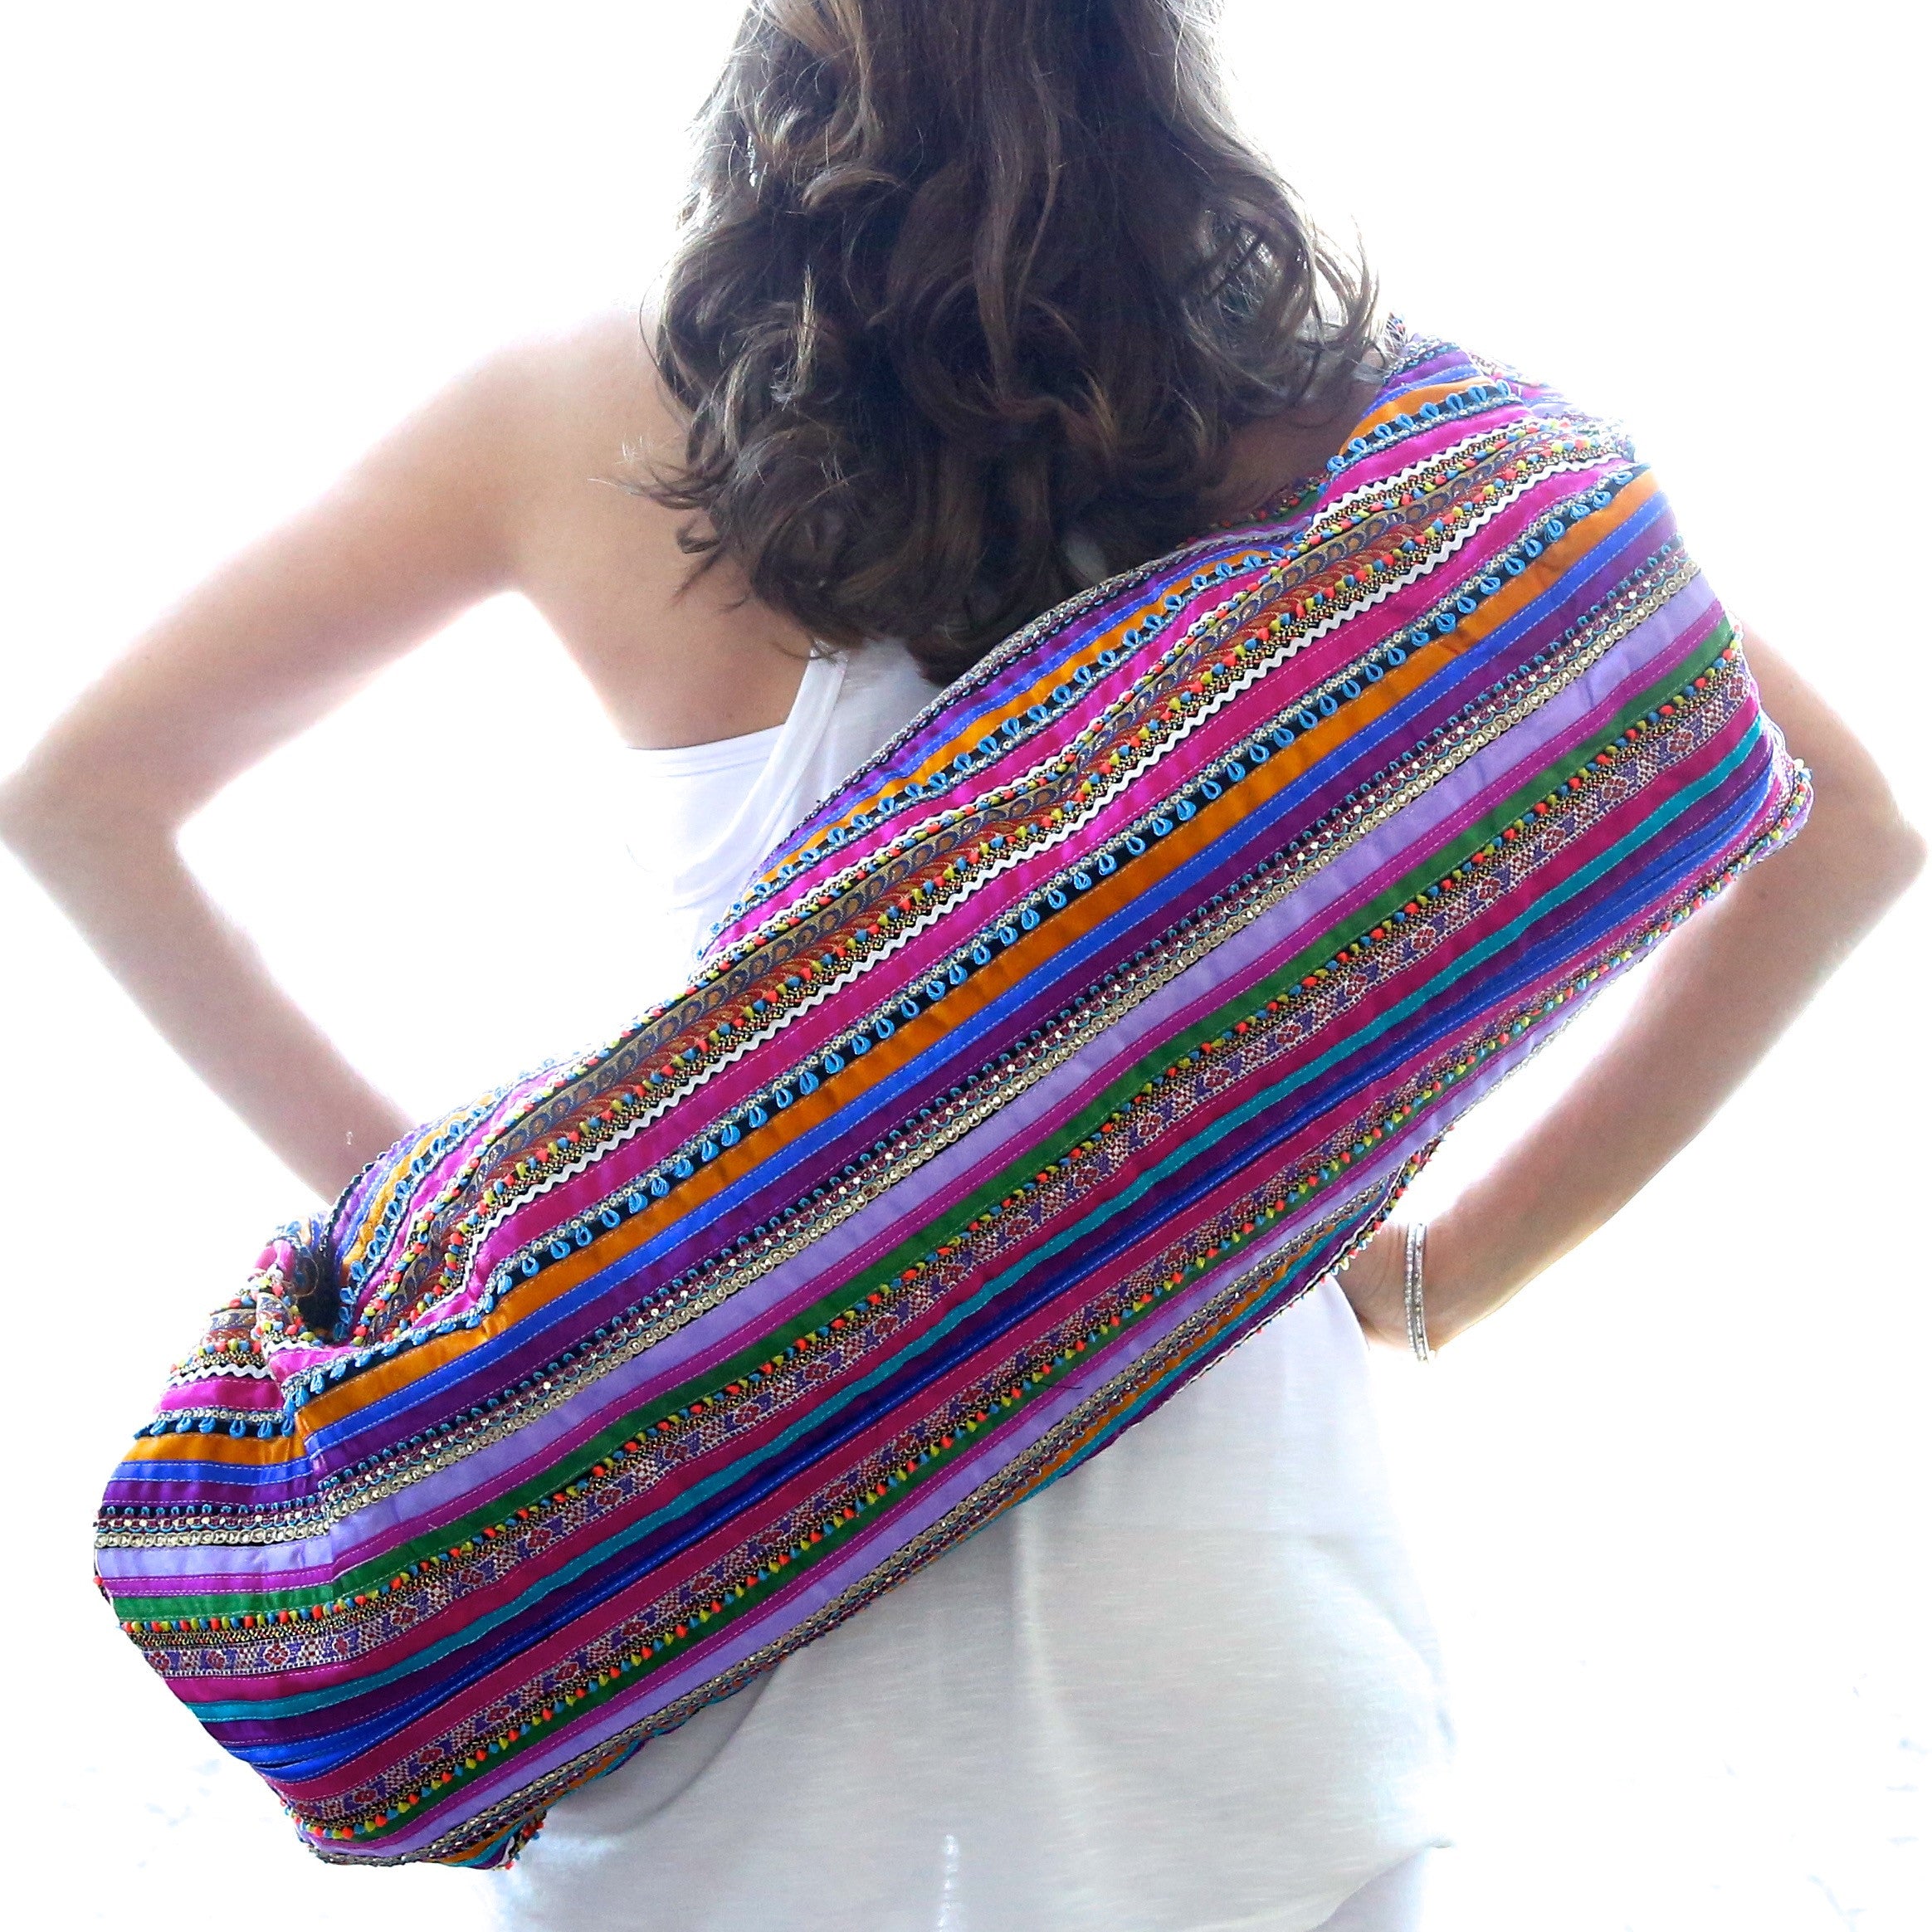 Millenti Yoga Mat Bag Handsfree - Stylish Reversible Sling Bag